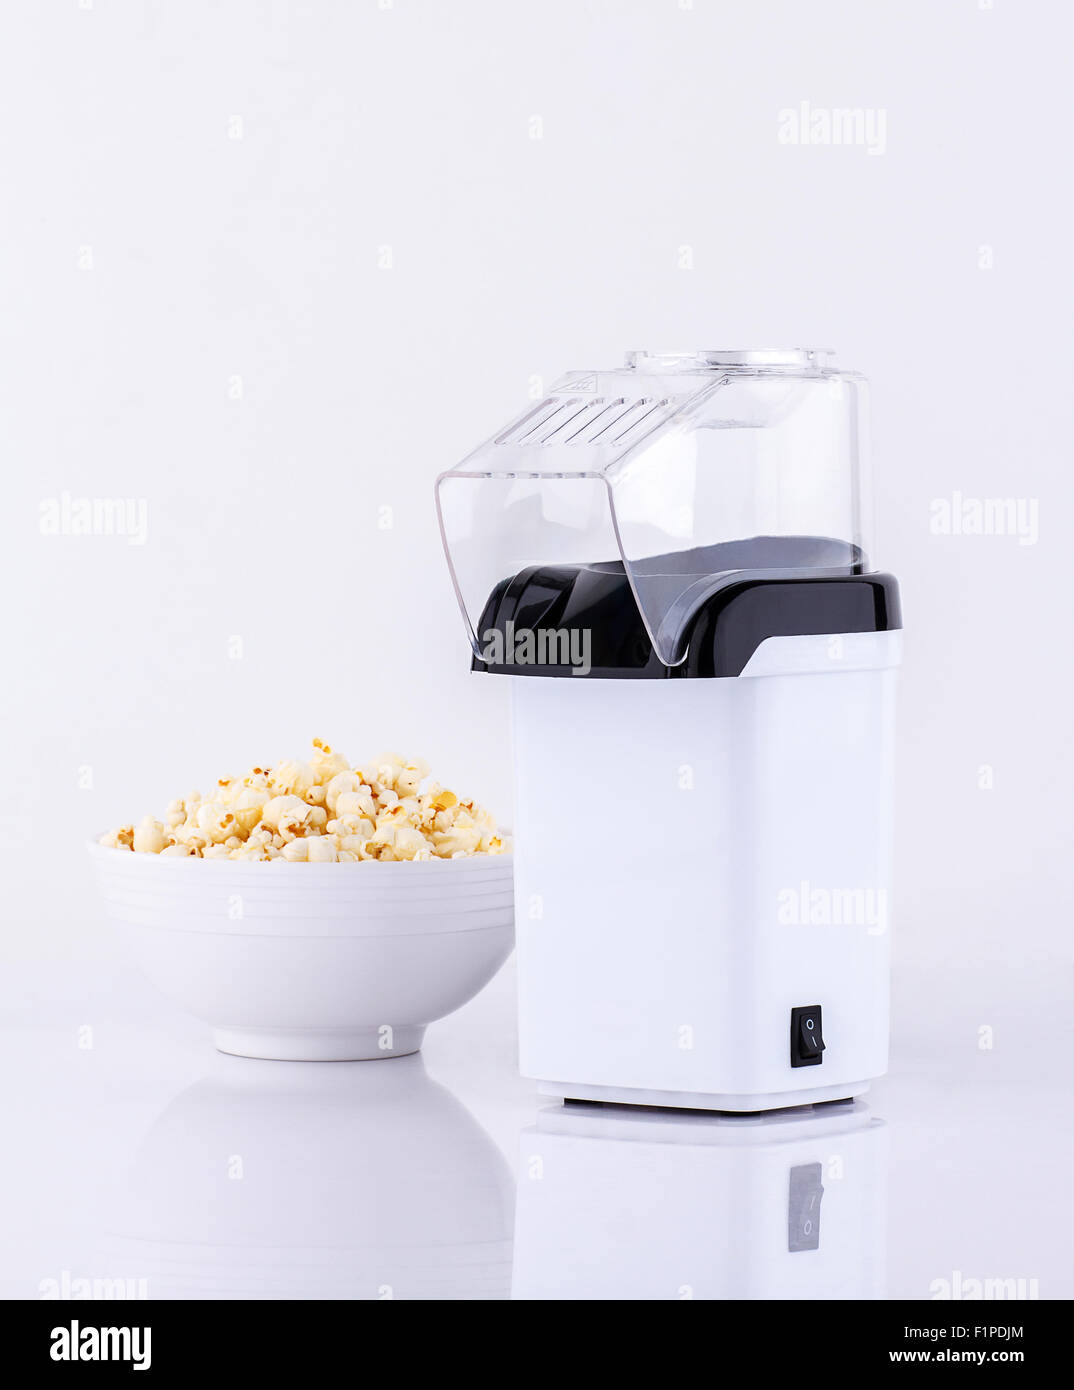 https://c8.alamy.com/comp/F1PDJM/popcorn-making-machine-with-popcorn-isolated-on-white-background-F1PDJM.jpg